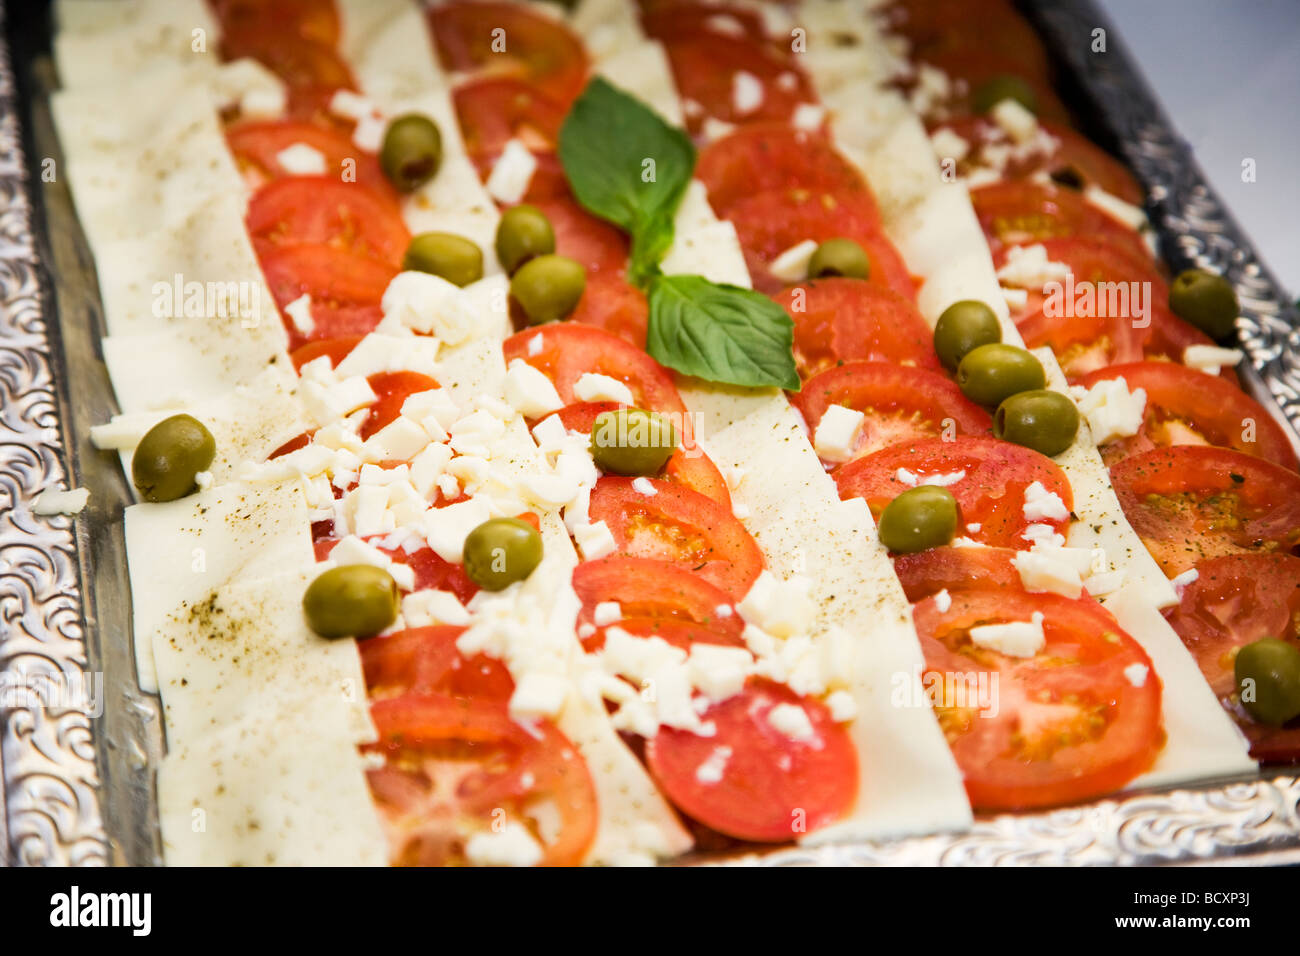 Starter with tomato mozzarella and stuffed olives Stock Photo